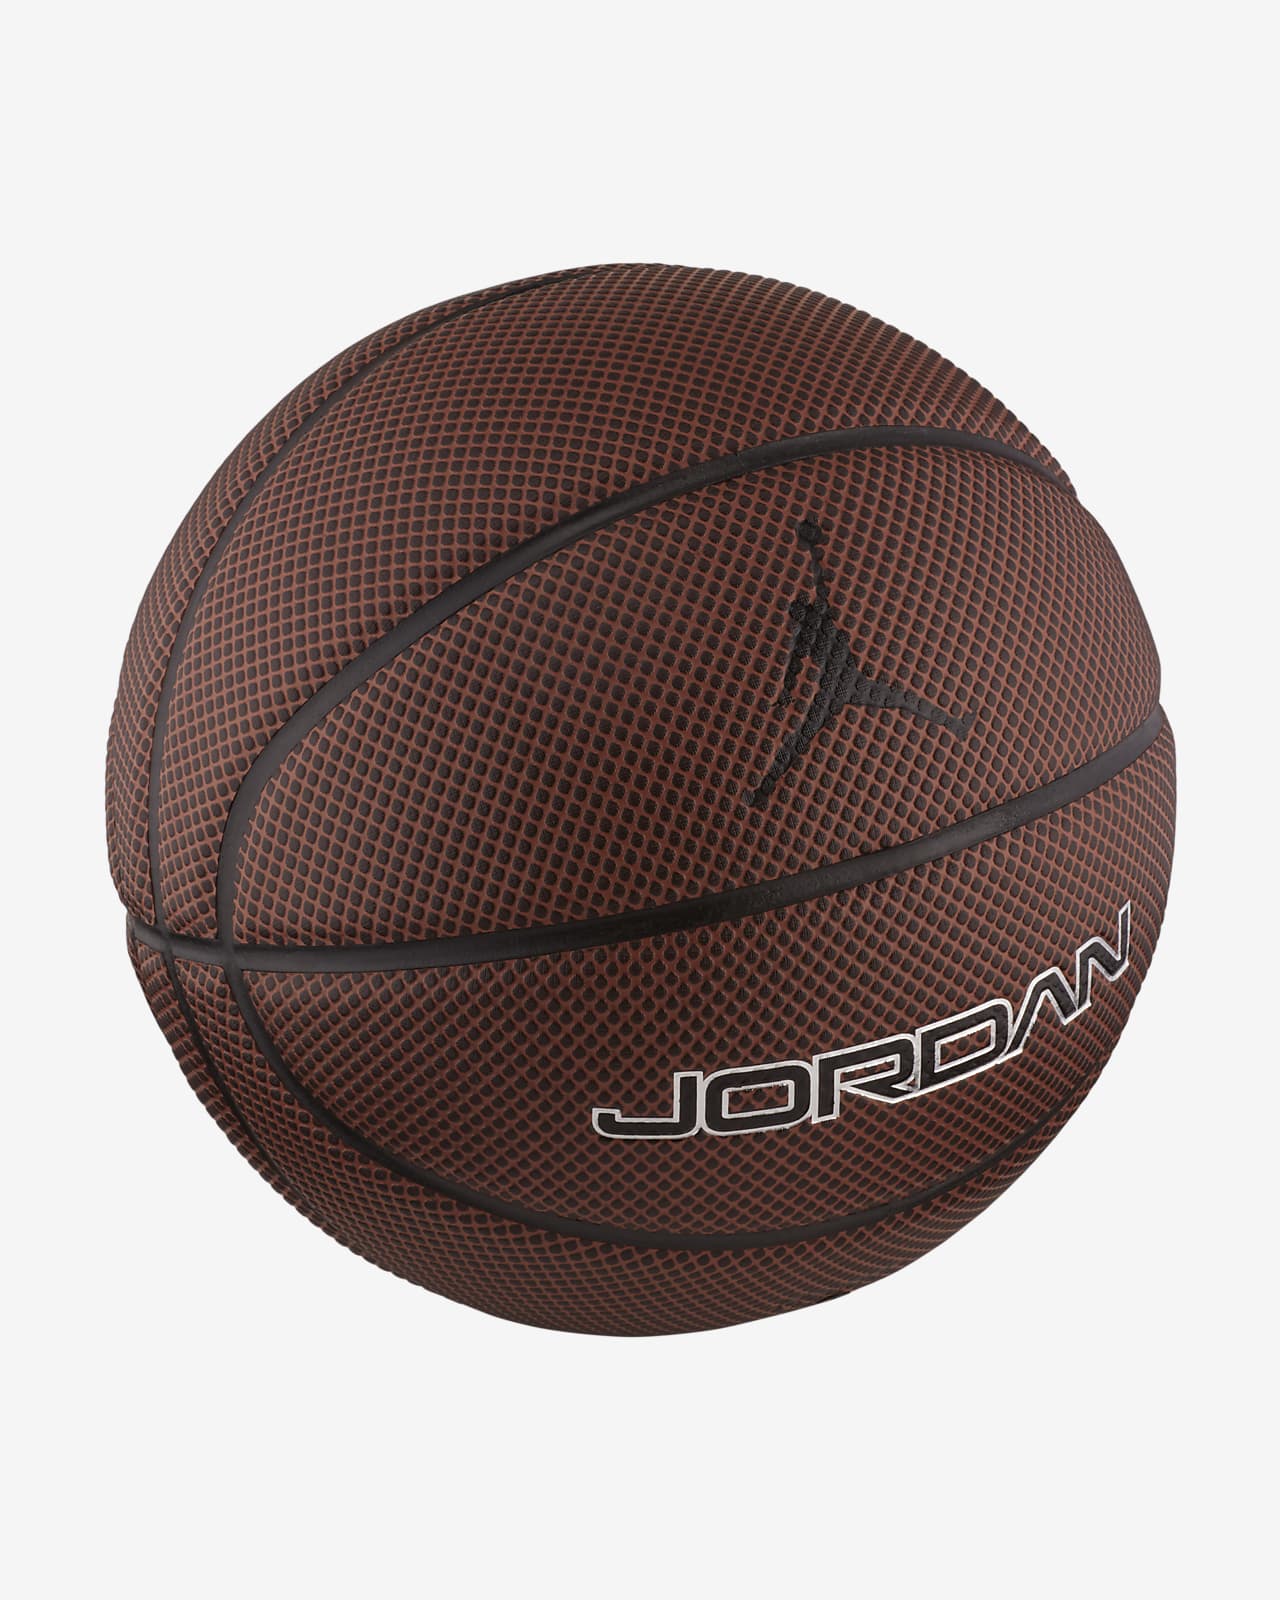 Legacy 8P (Size 7) Basketball. Nike.com